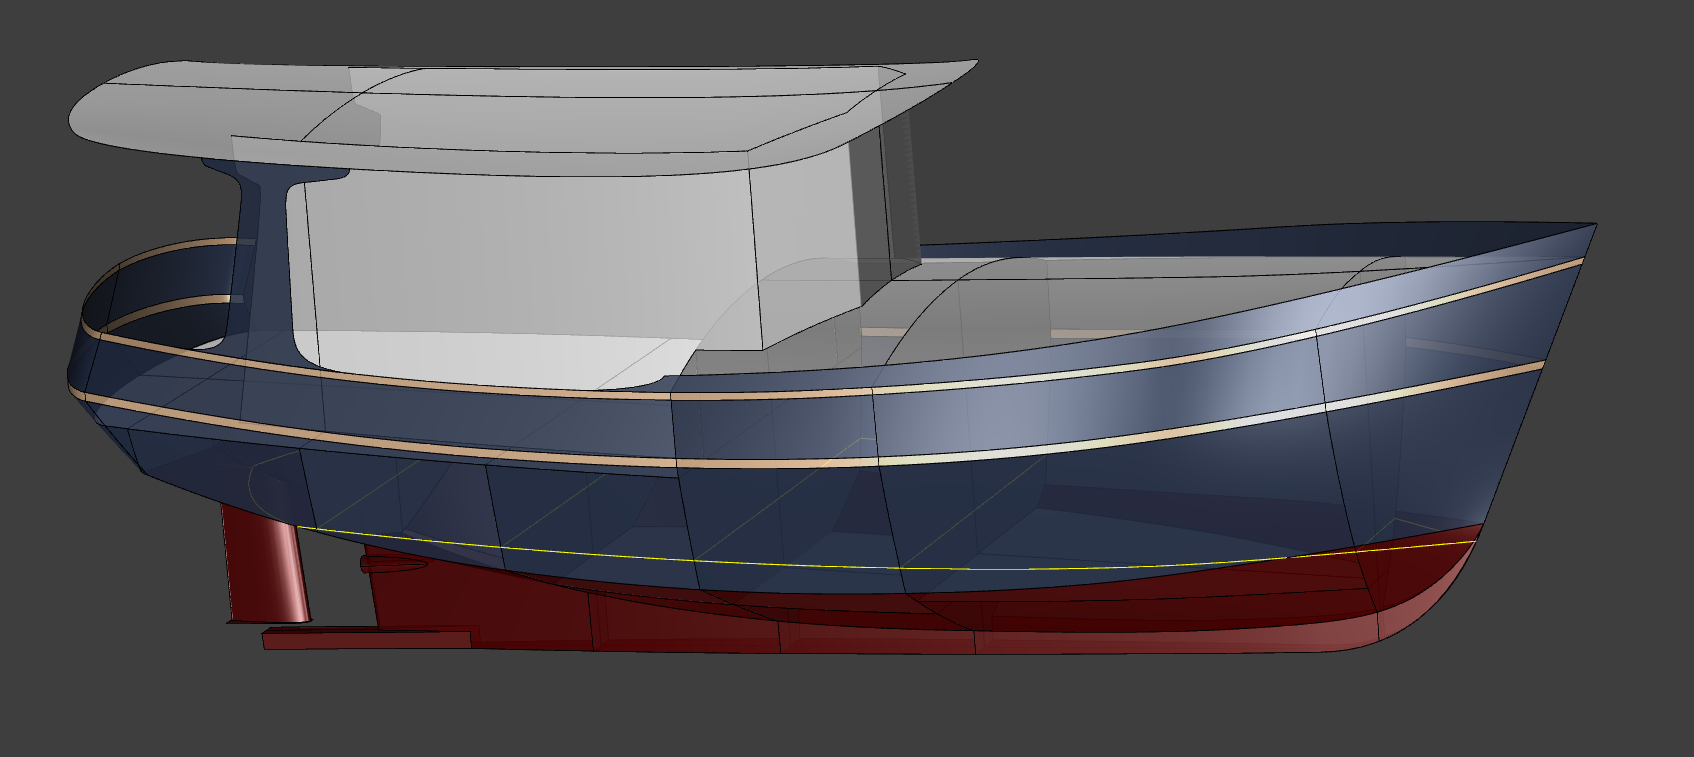 36' Pocket Trawler VAGABOND - Kasten Marine Design, Inc.